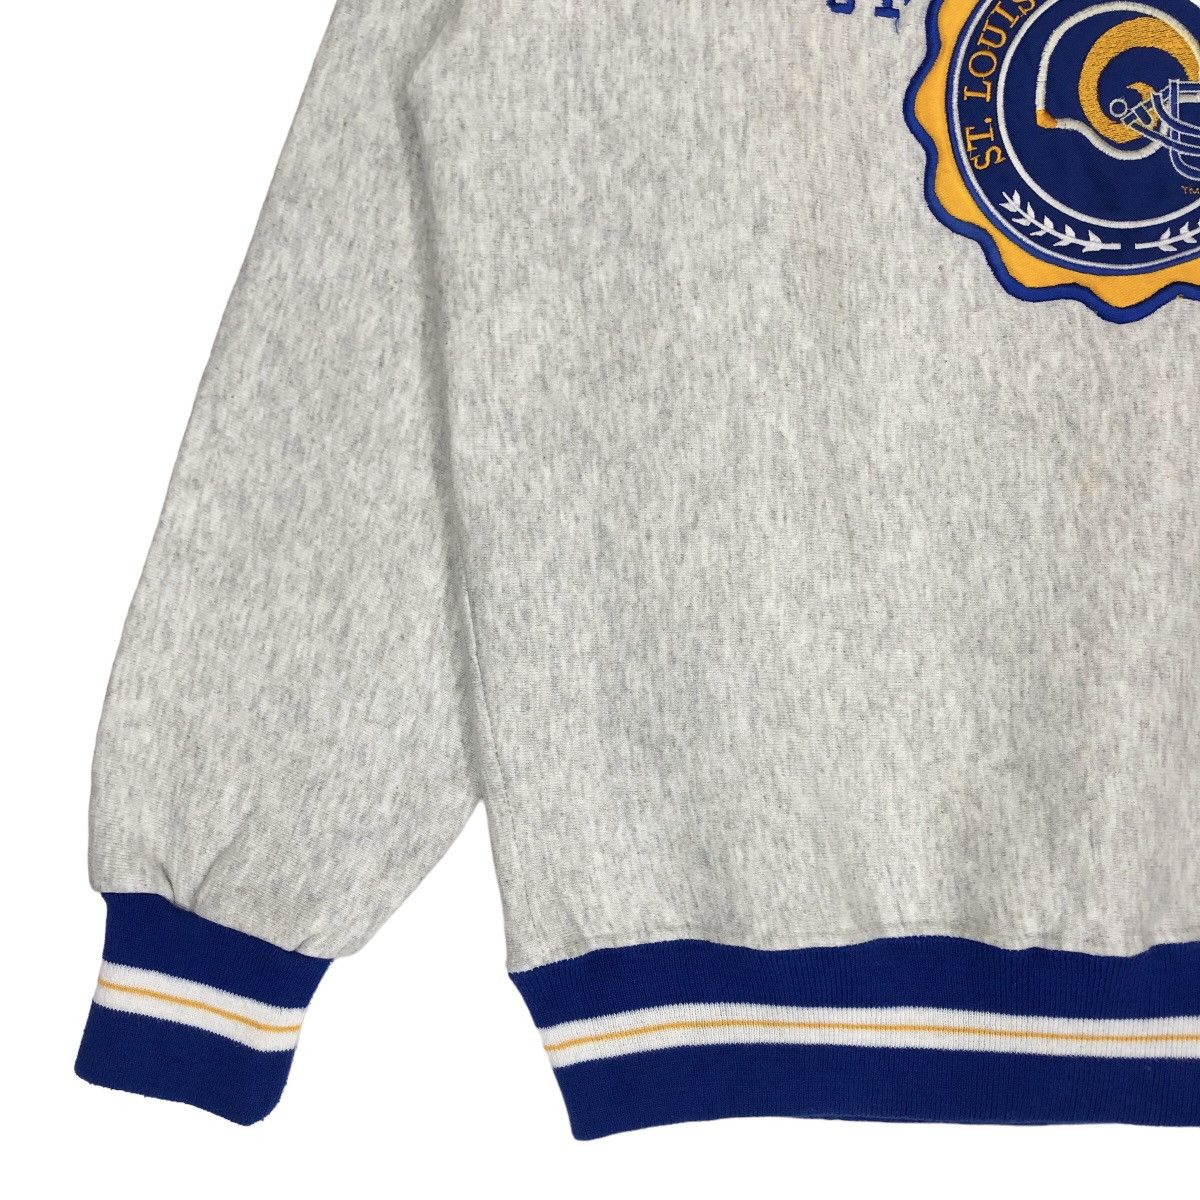 Vintage St Louis Rams Football Sweatshirt Embroidery Logo - 5